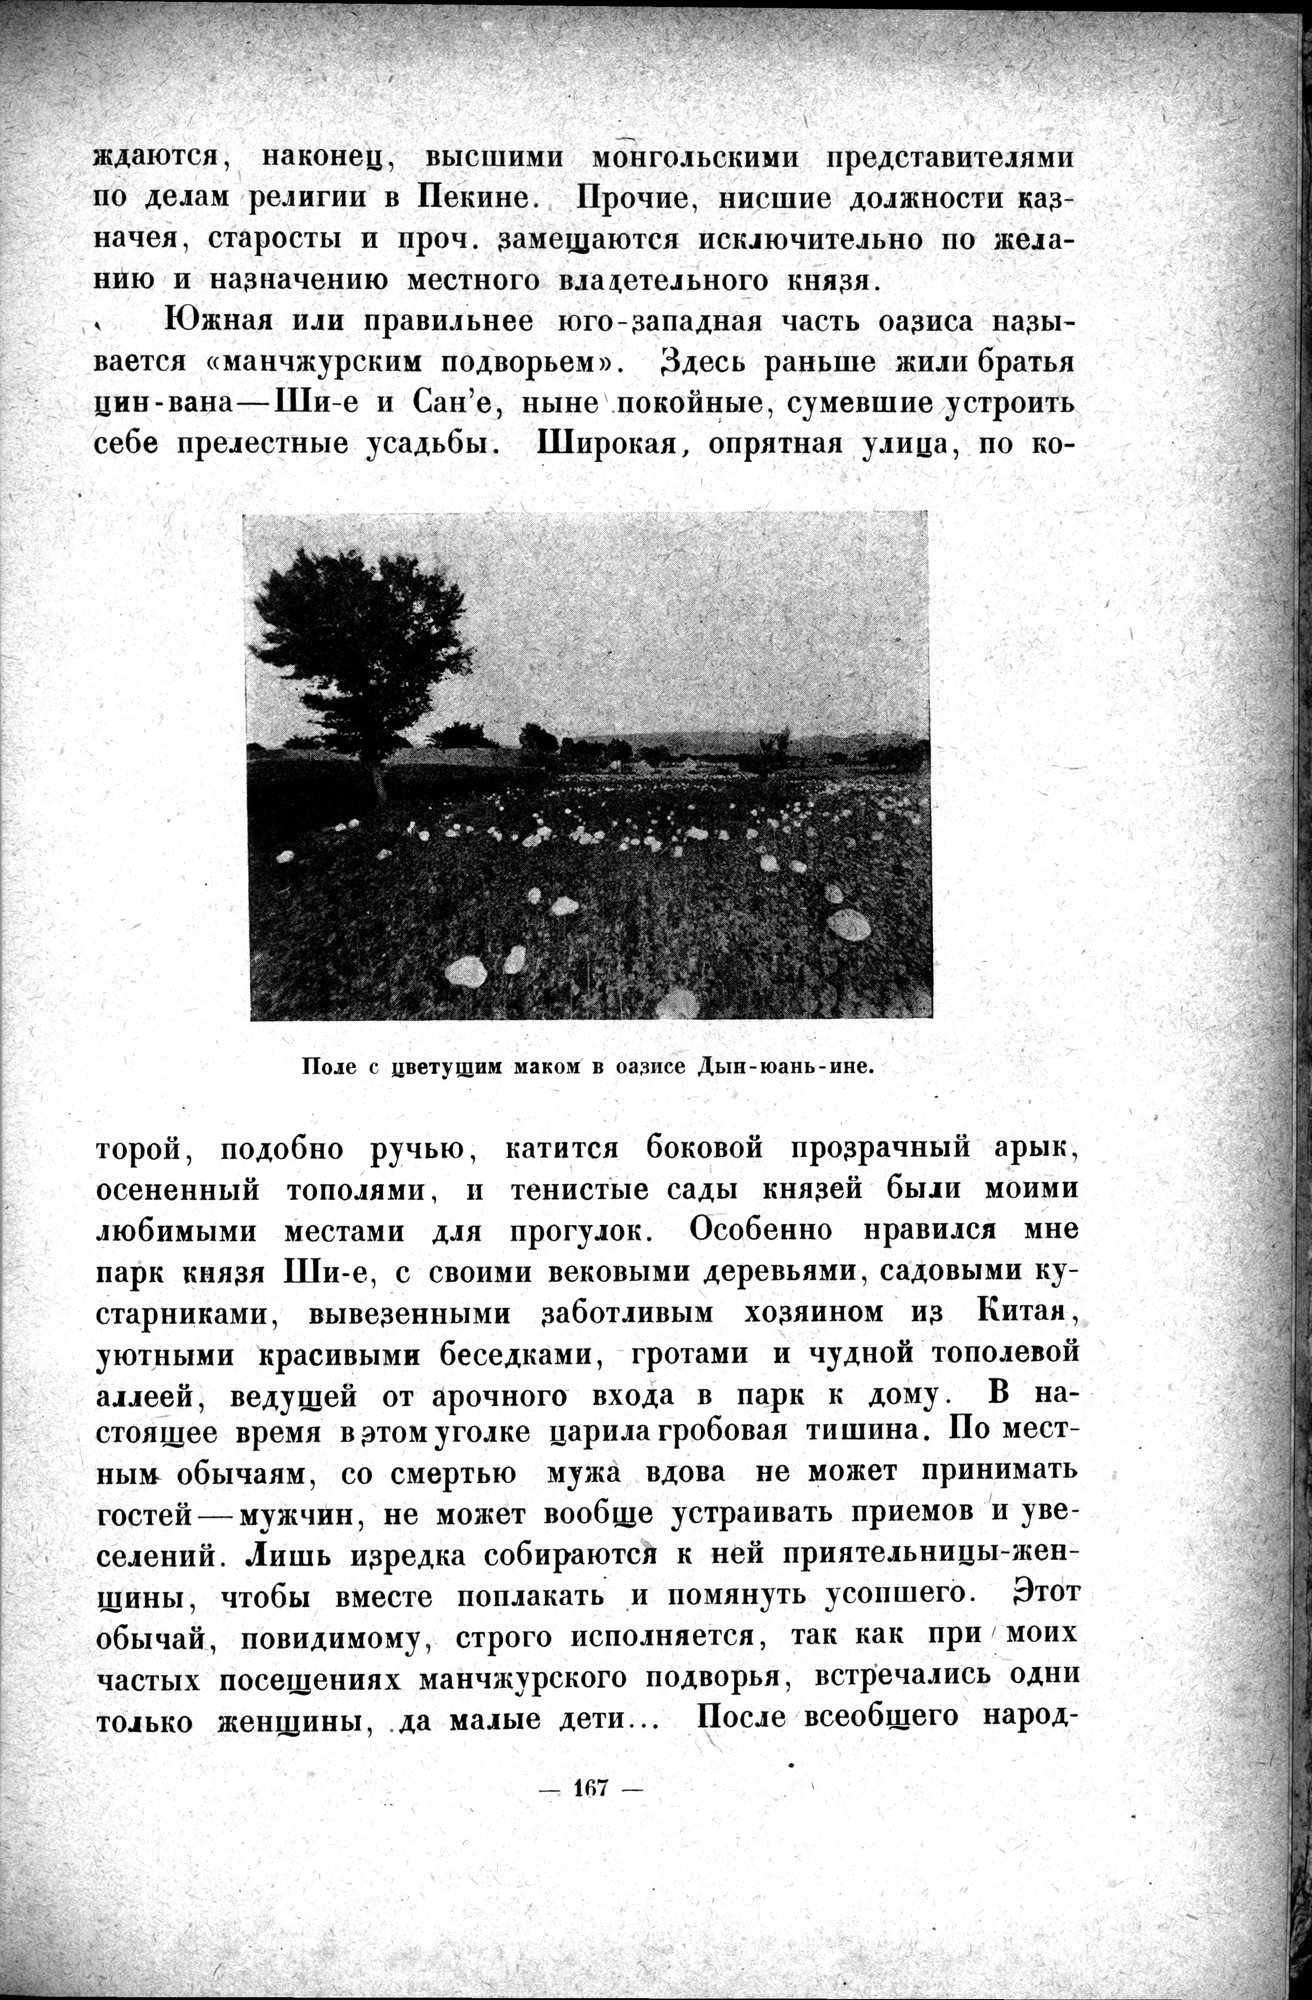 Mongoliya i Amdo i mertby gorod Khara-Khoto : vol.1 / Page 197 (Grayscale High Resolution Image)